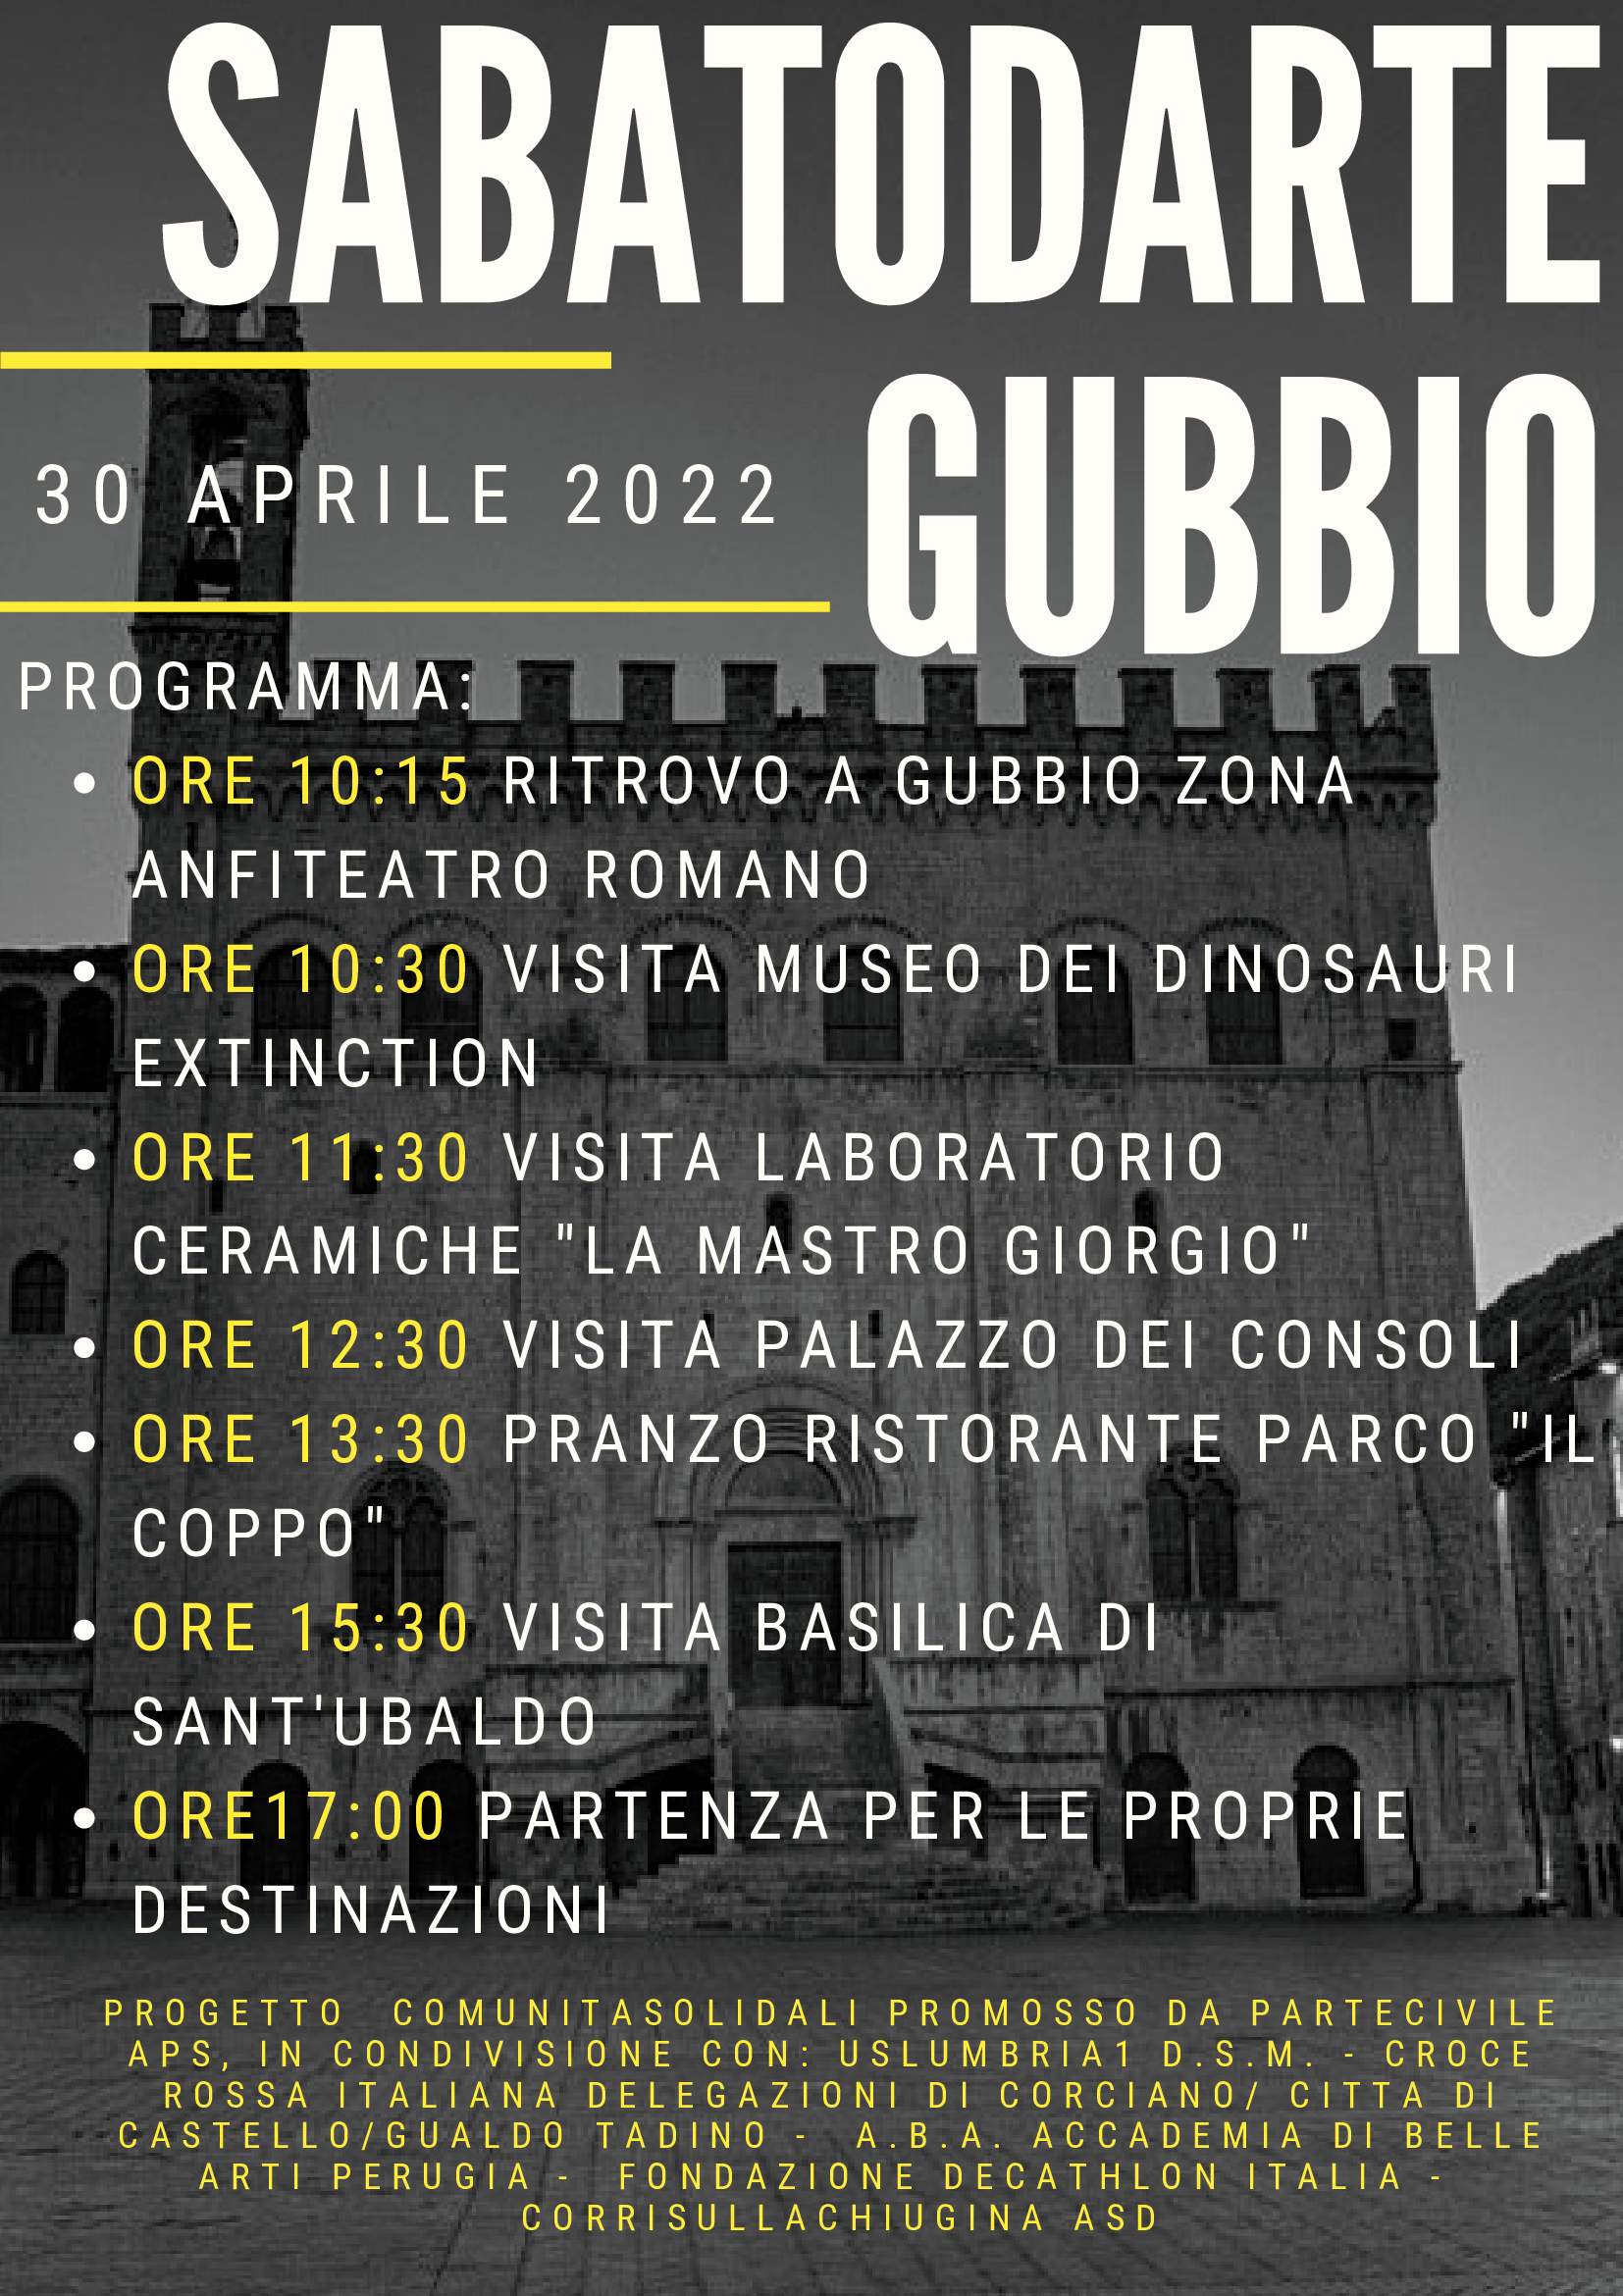 Nuovo appuntamento di SABATODARTE: Sabato 30 Aprile a Gubbio!